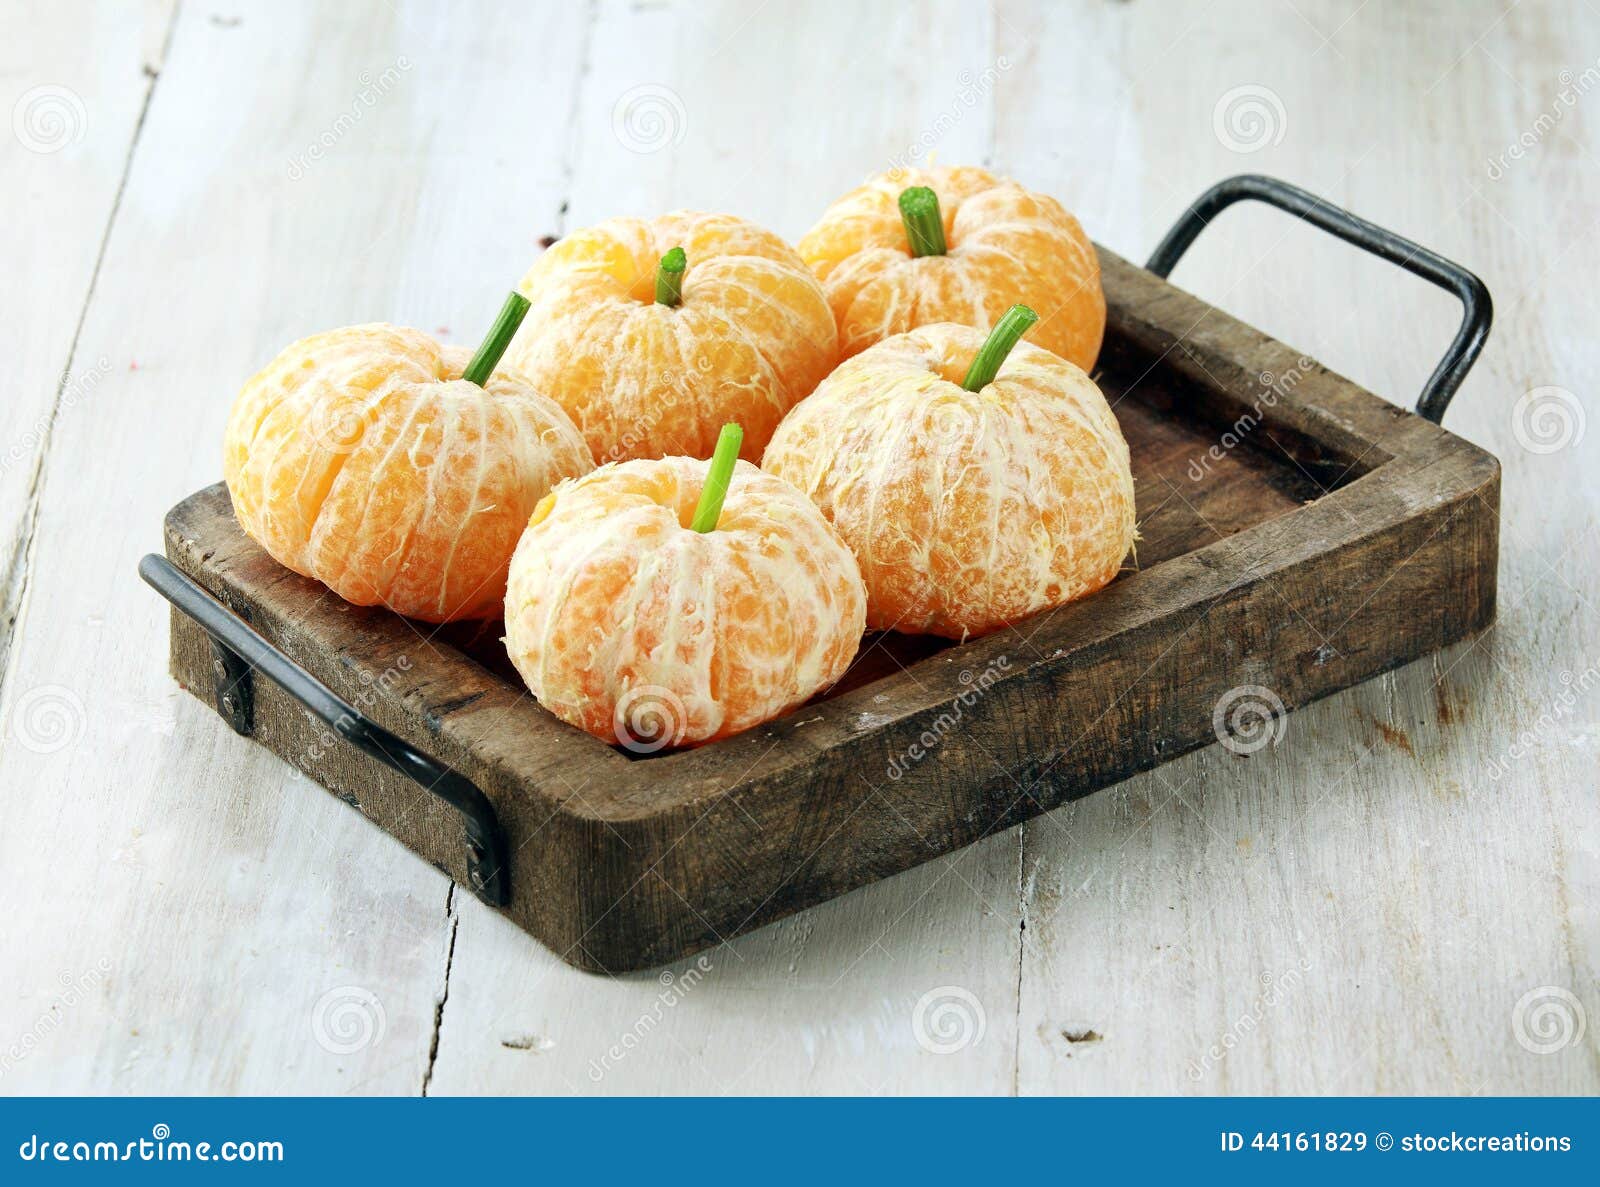 clementine oranges decorated like pumpkins